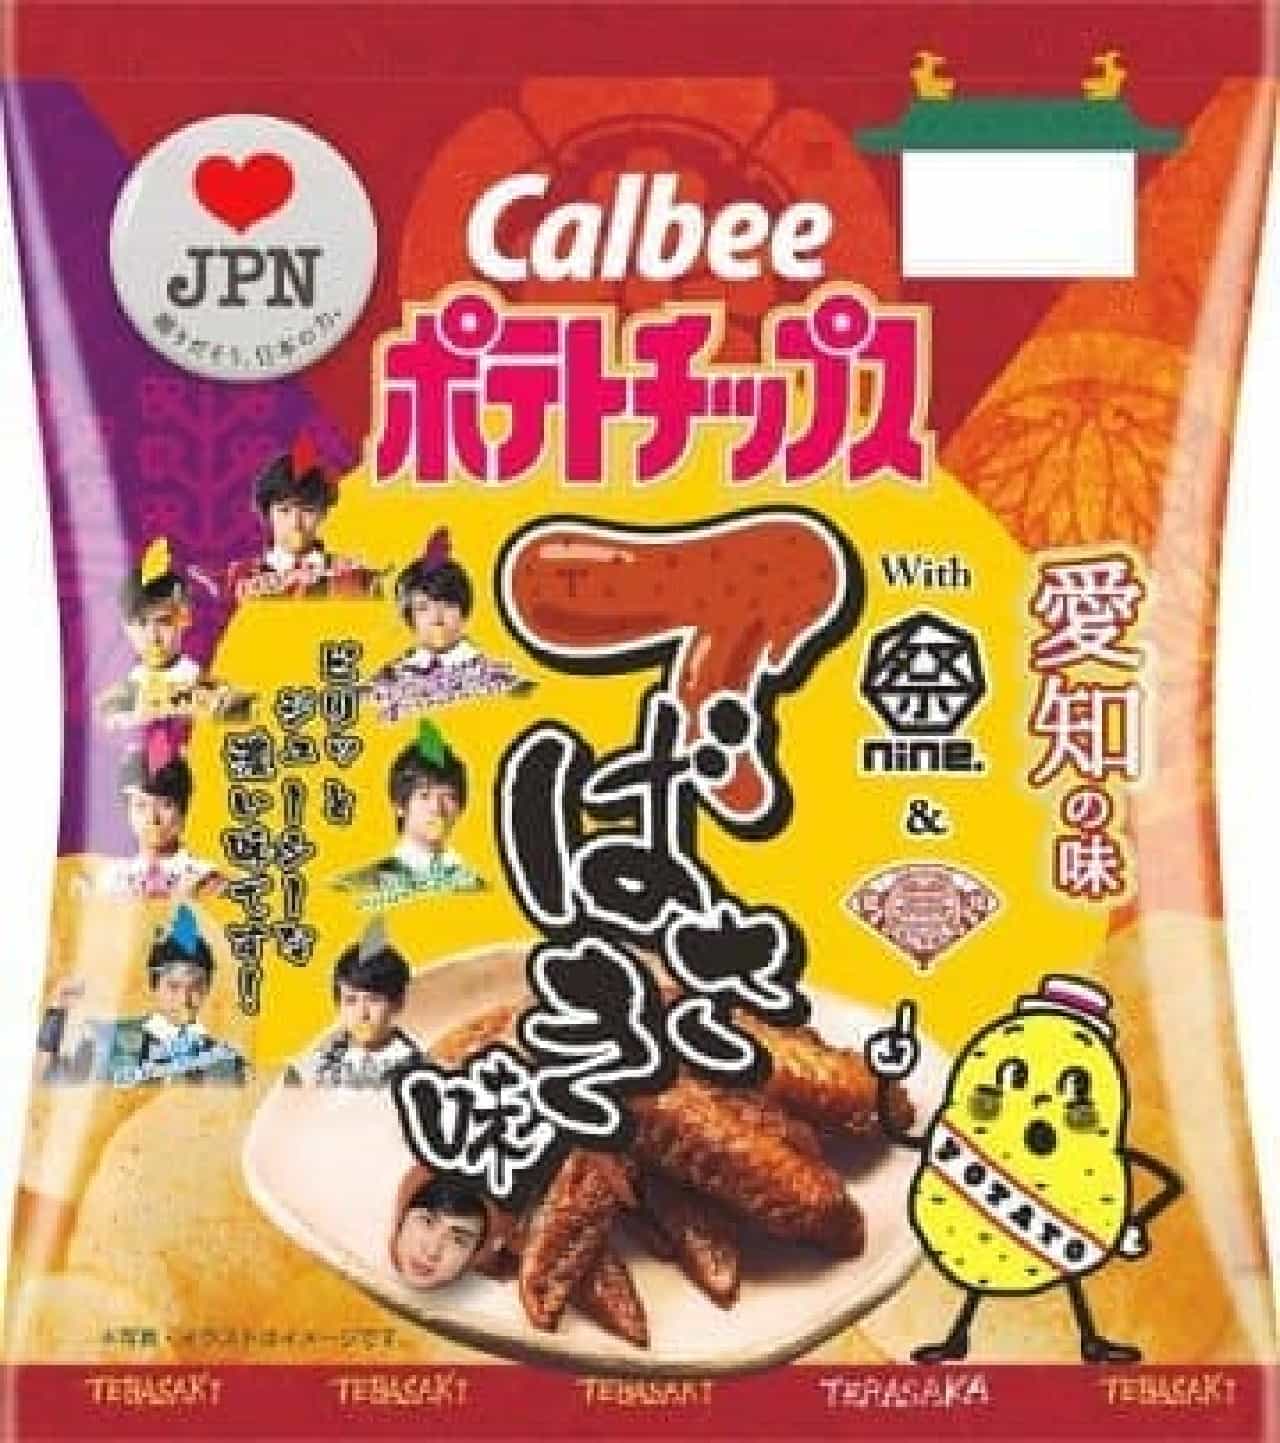 Potato chips Tebasaki flavor